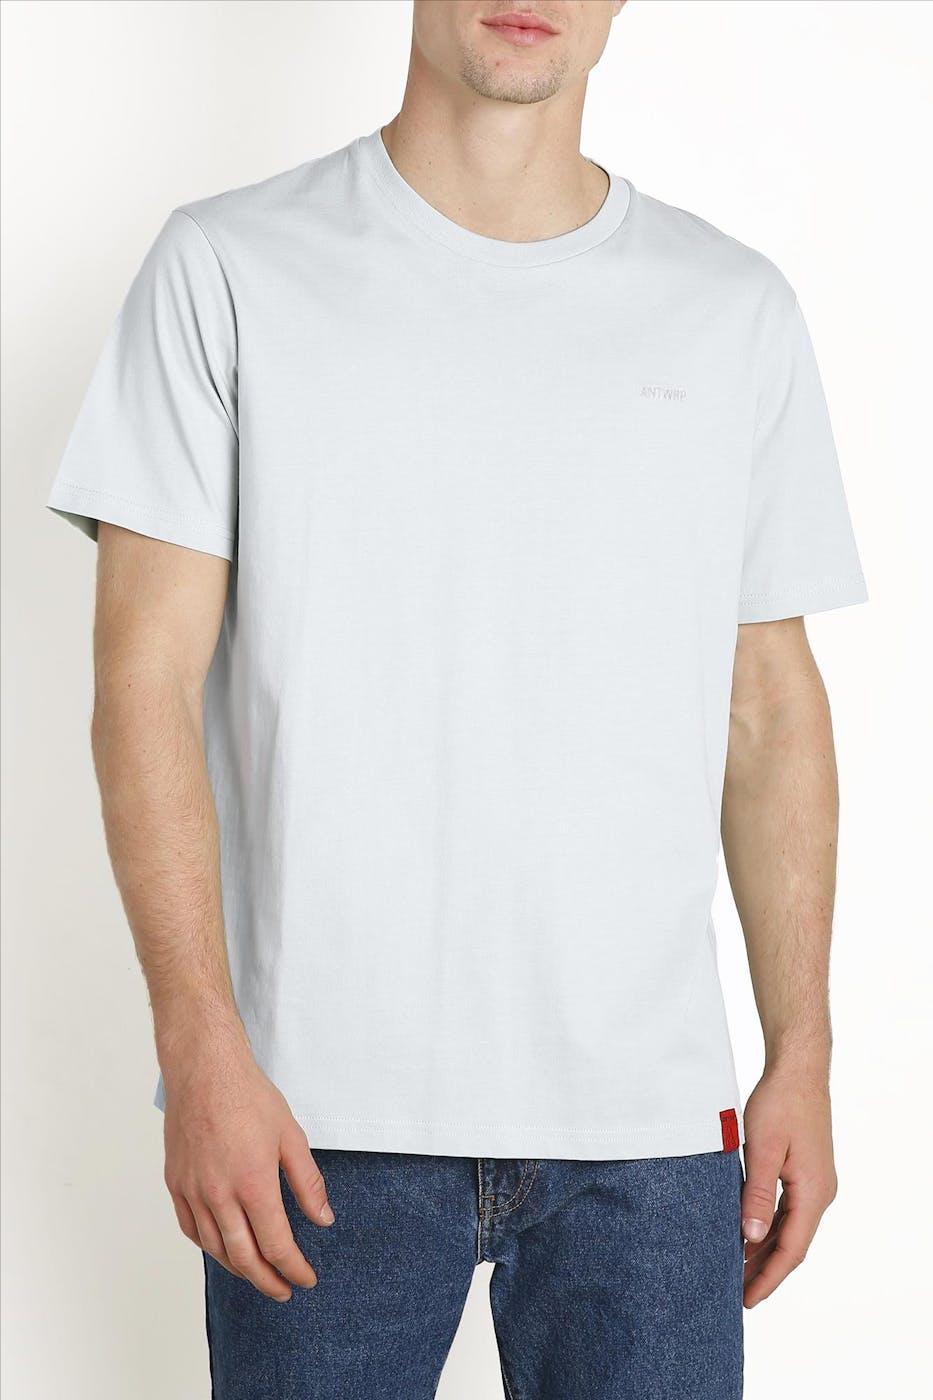 Antwrp - Lichtblauwe Basic Logo T-shirt